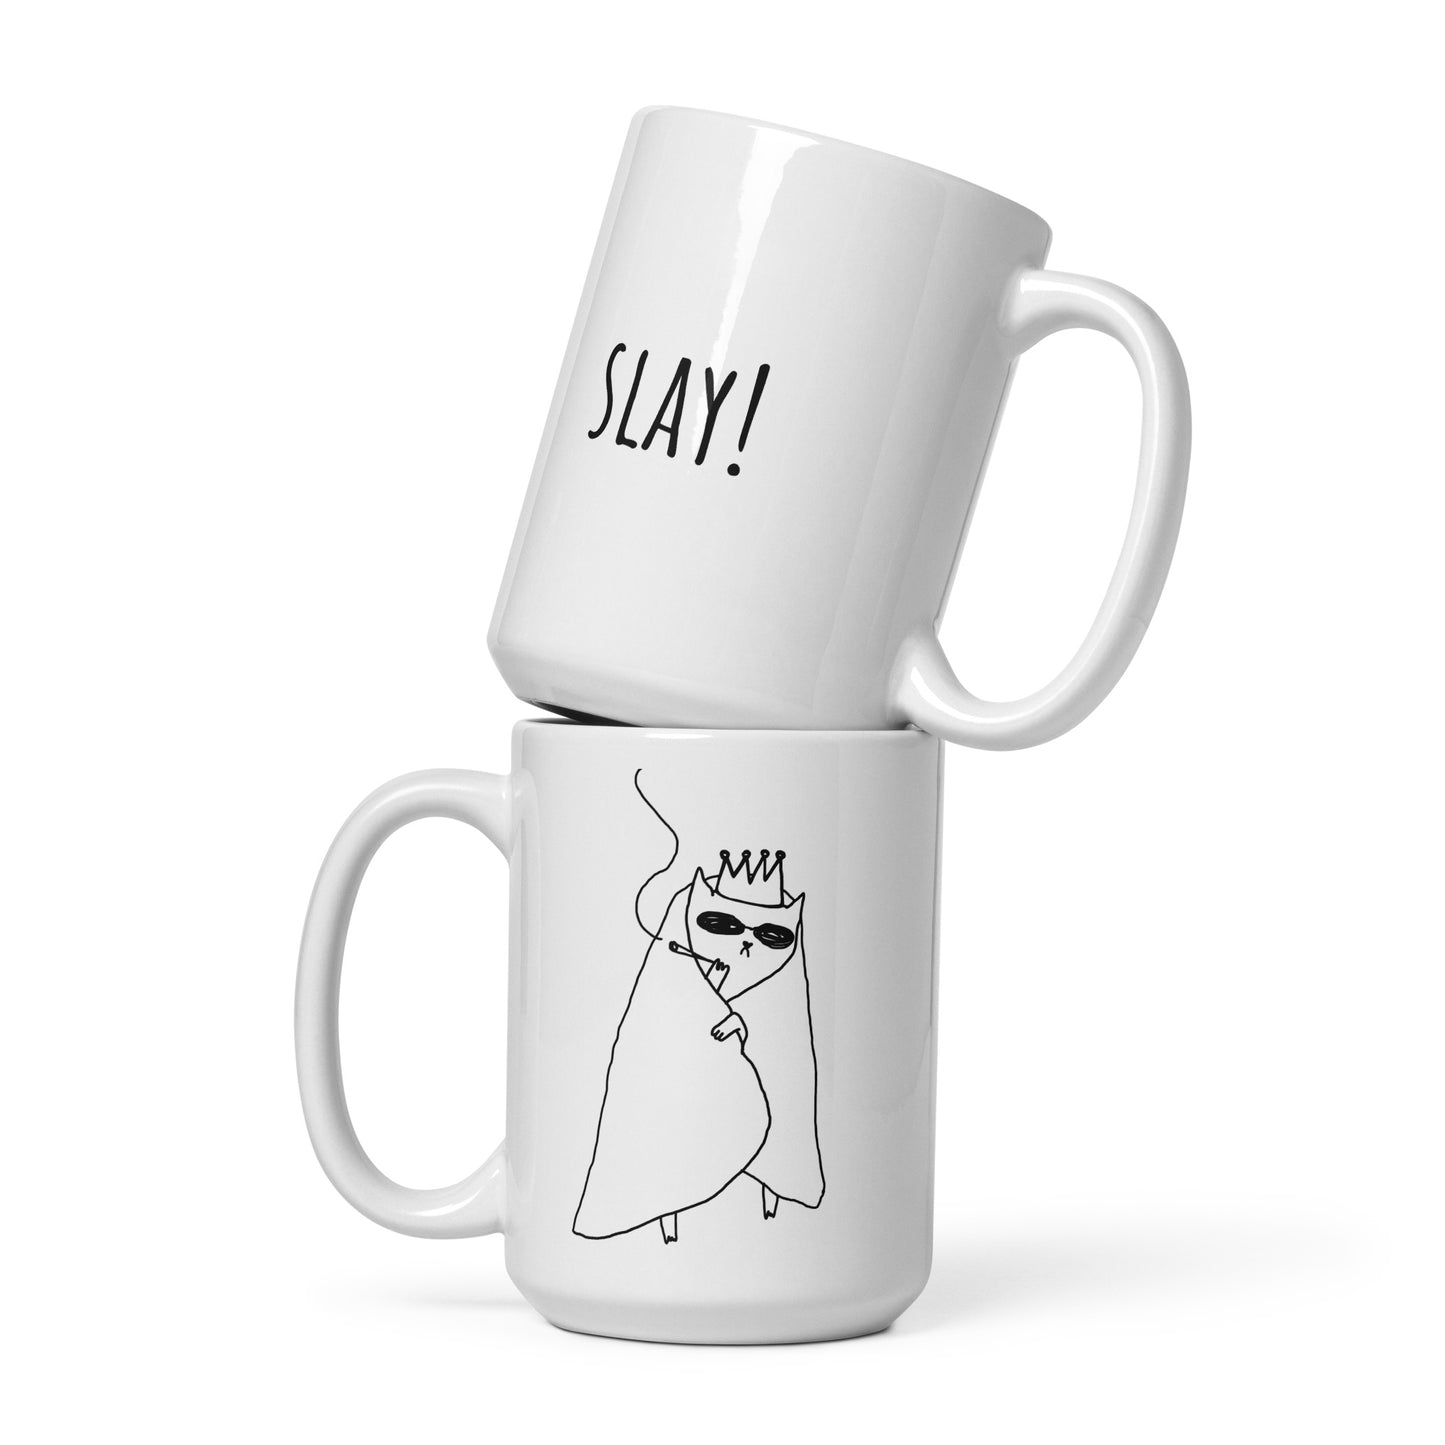 Slay! - White glossy mug